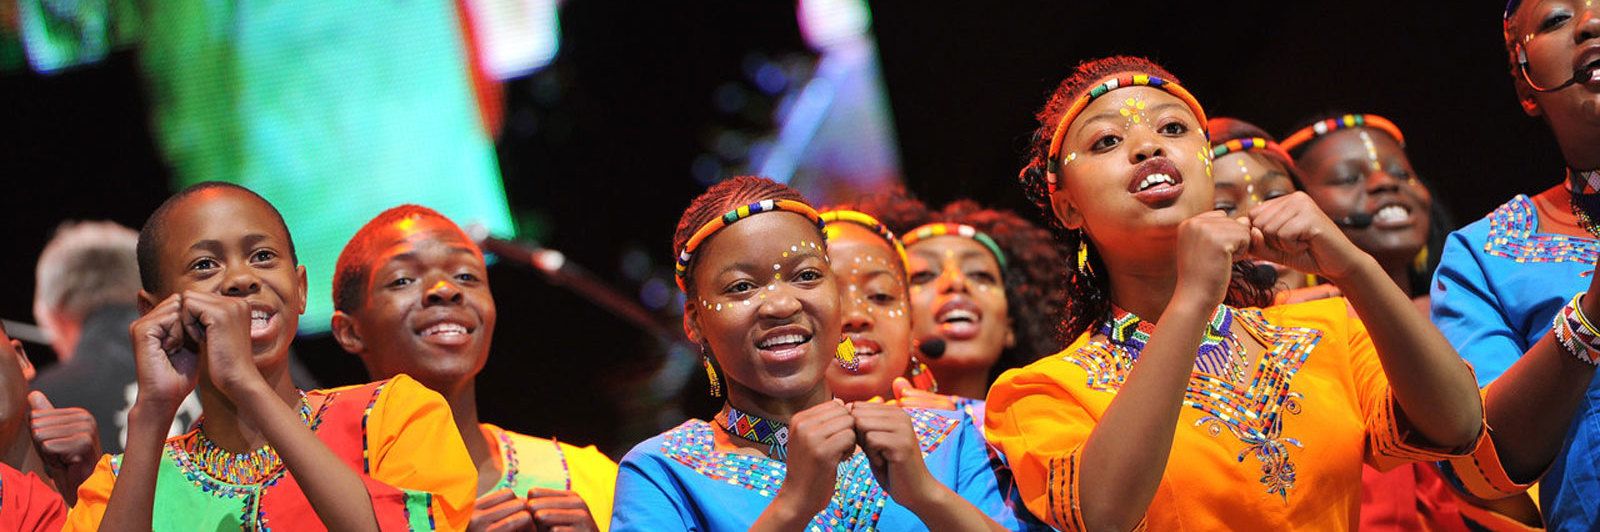 Vusi Mahlasela and Mzansi Youth Choir collaborate